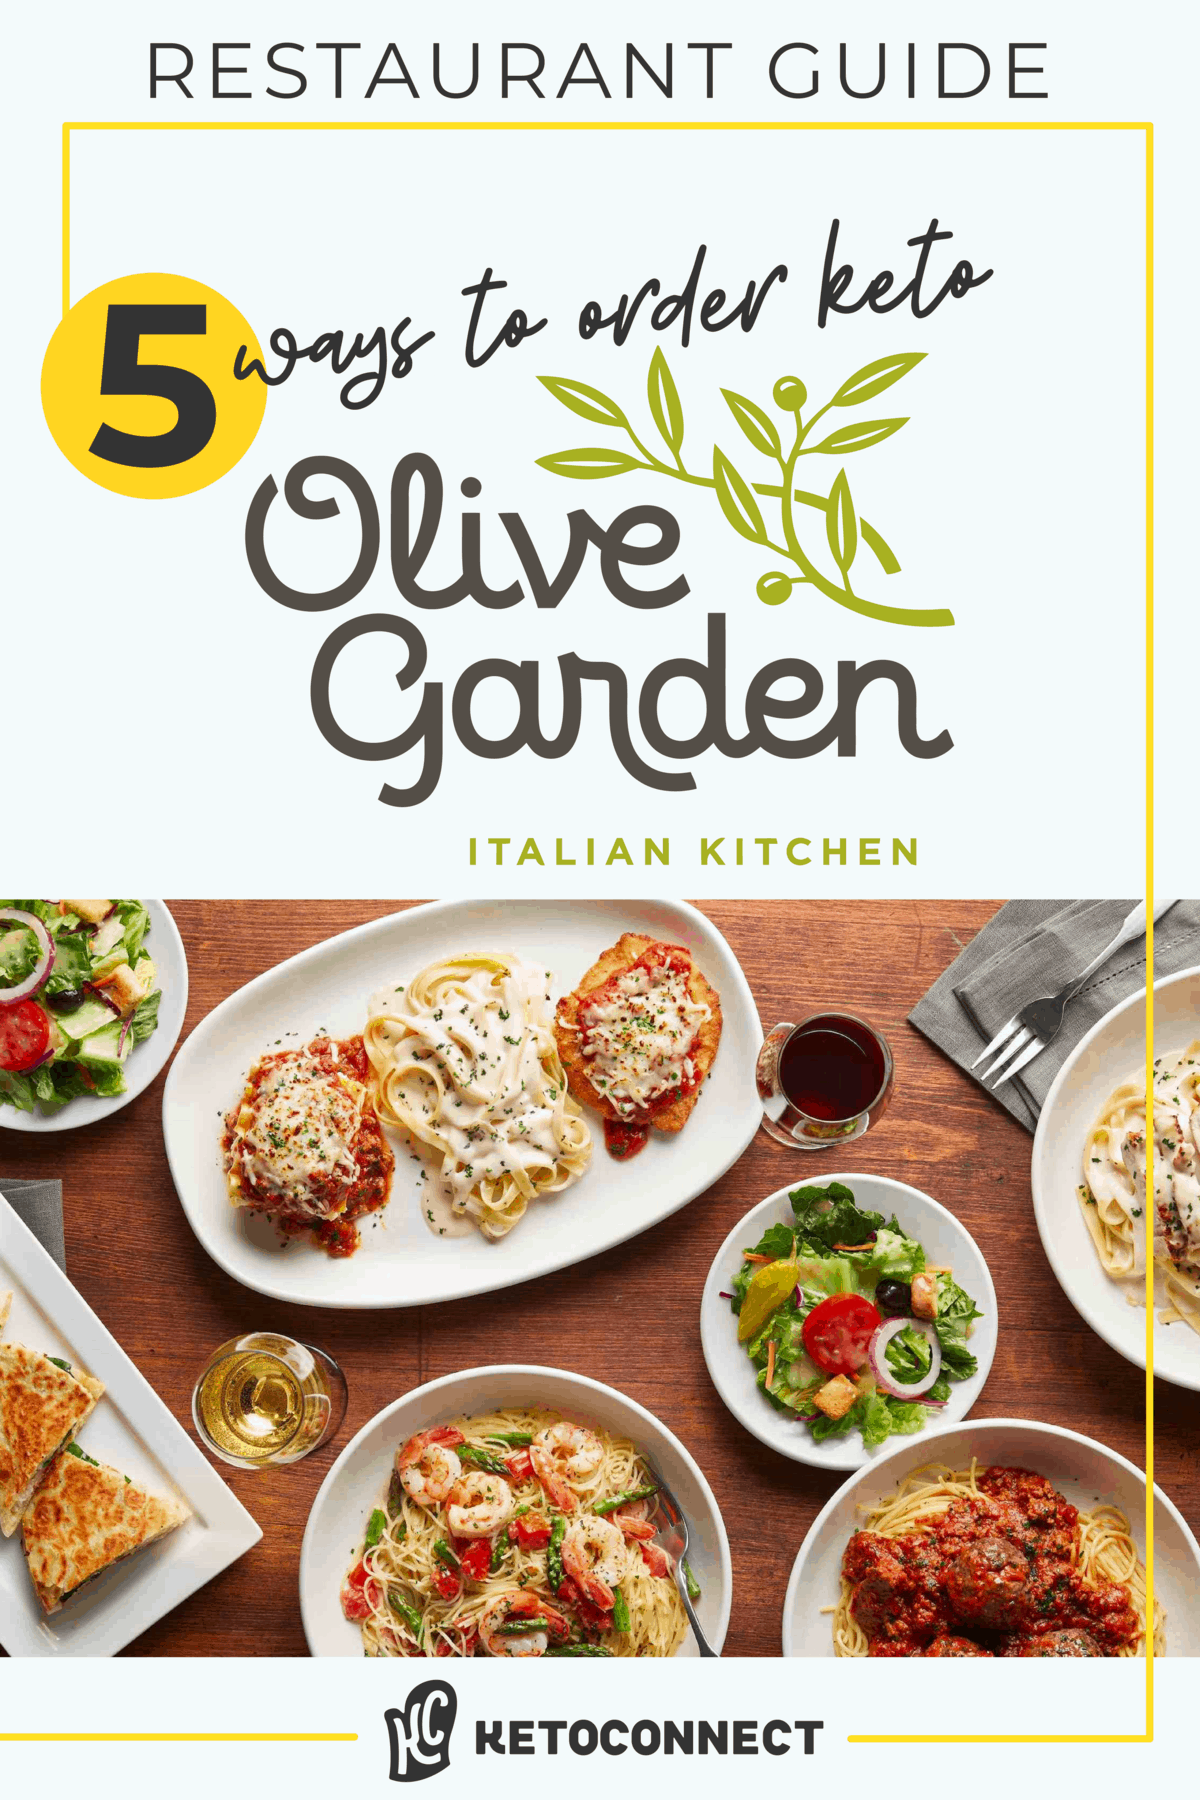 Classic Entrées Menu Item List  Olive Garden Italian Restaurant